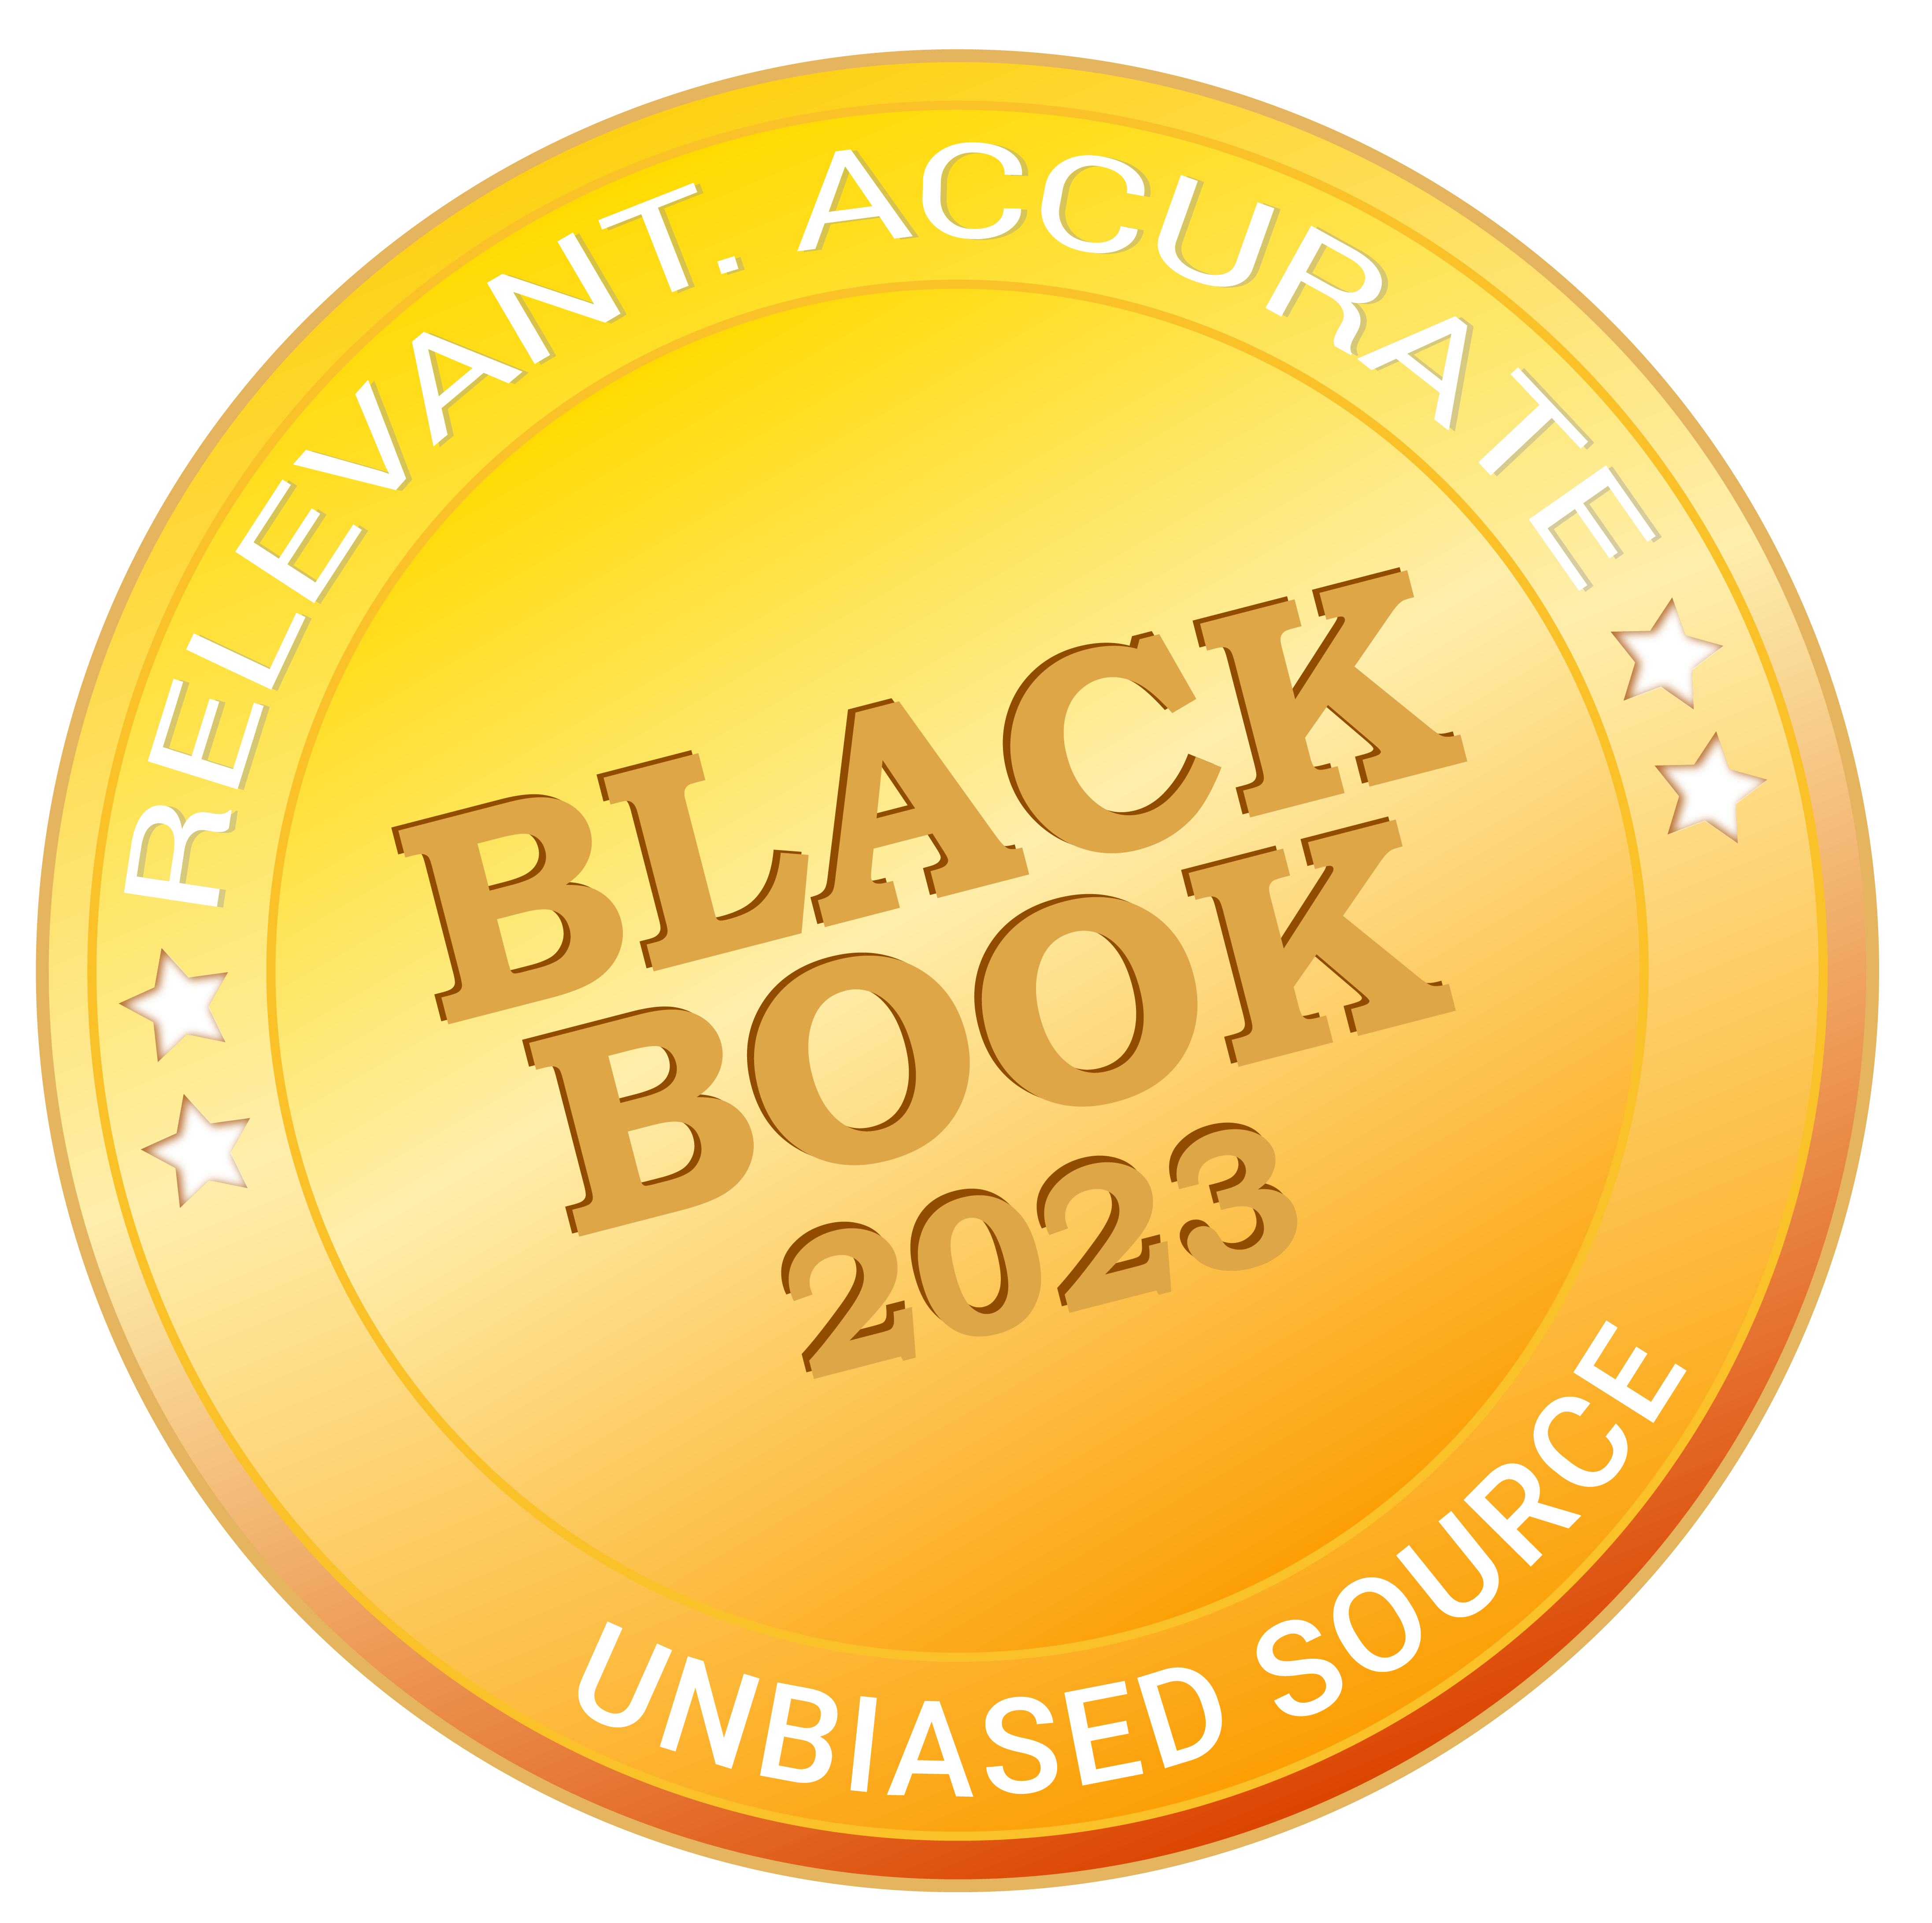 Black Book Research 2023 seal